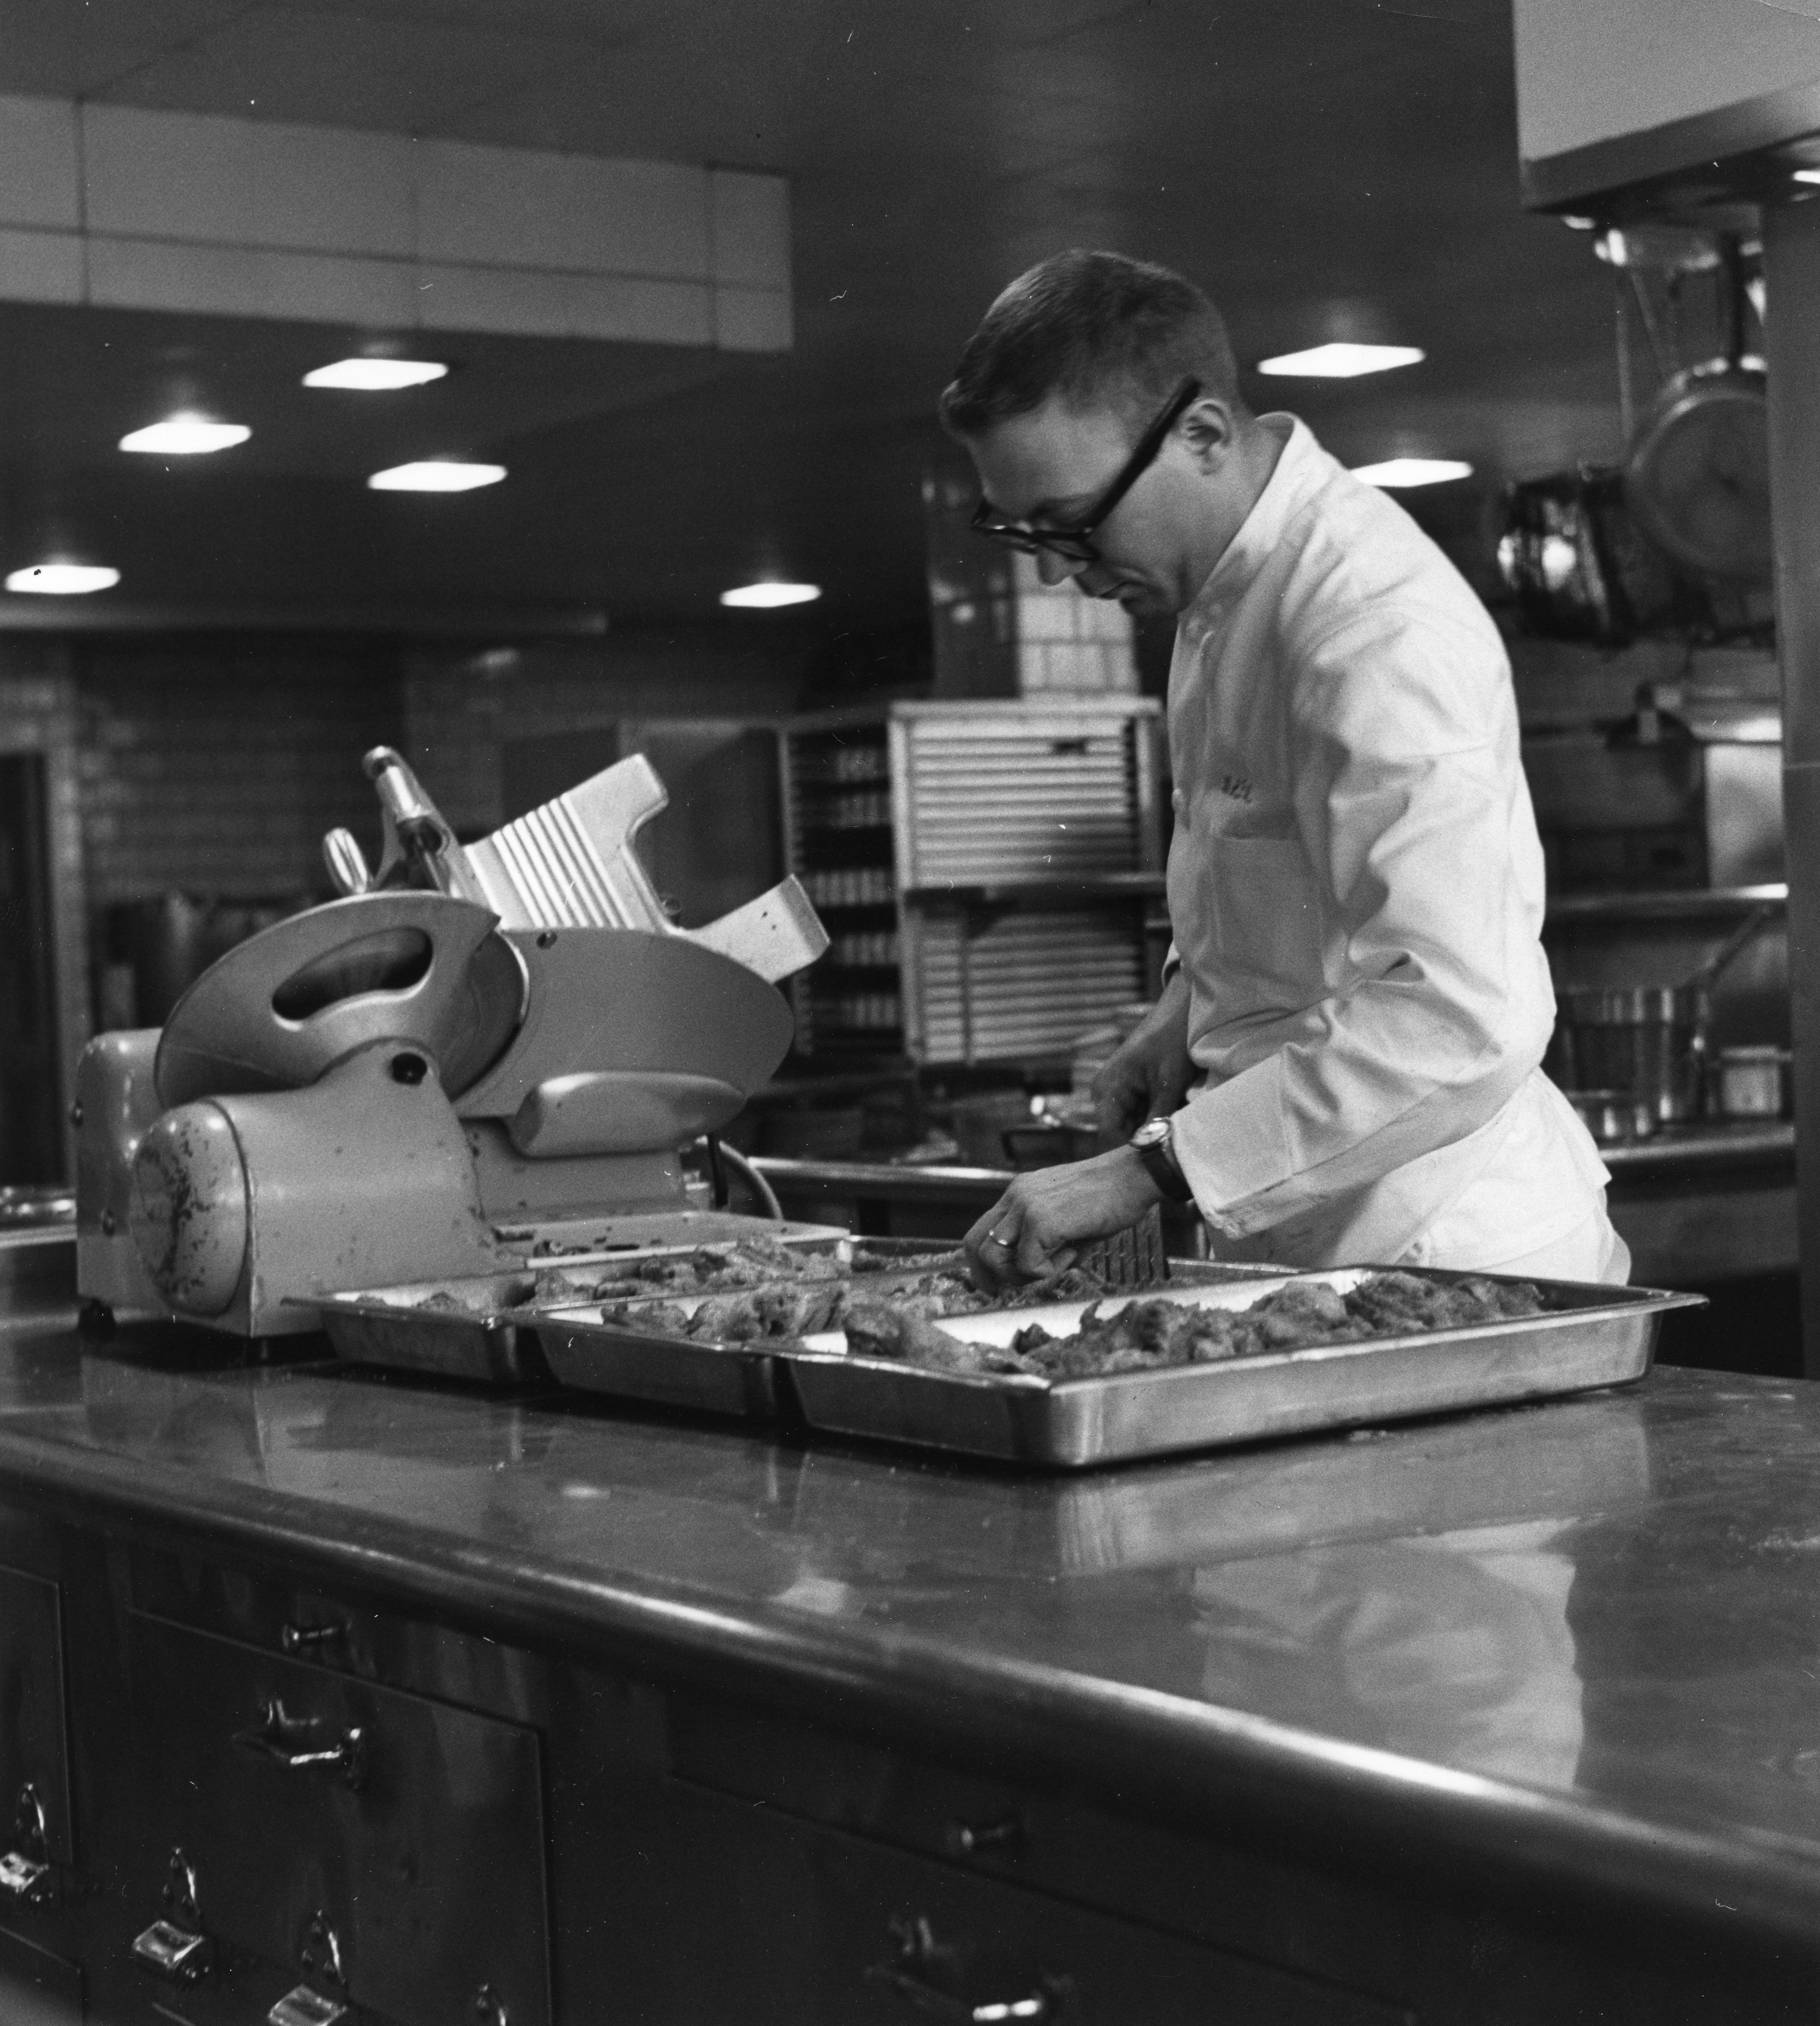 Worker at the Kellogg Center kitchen, 1959.